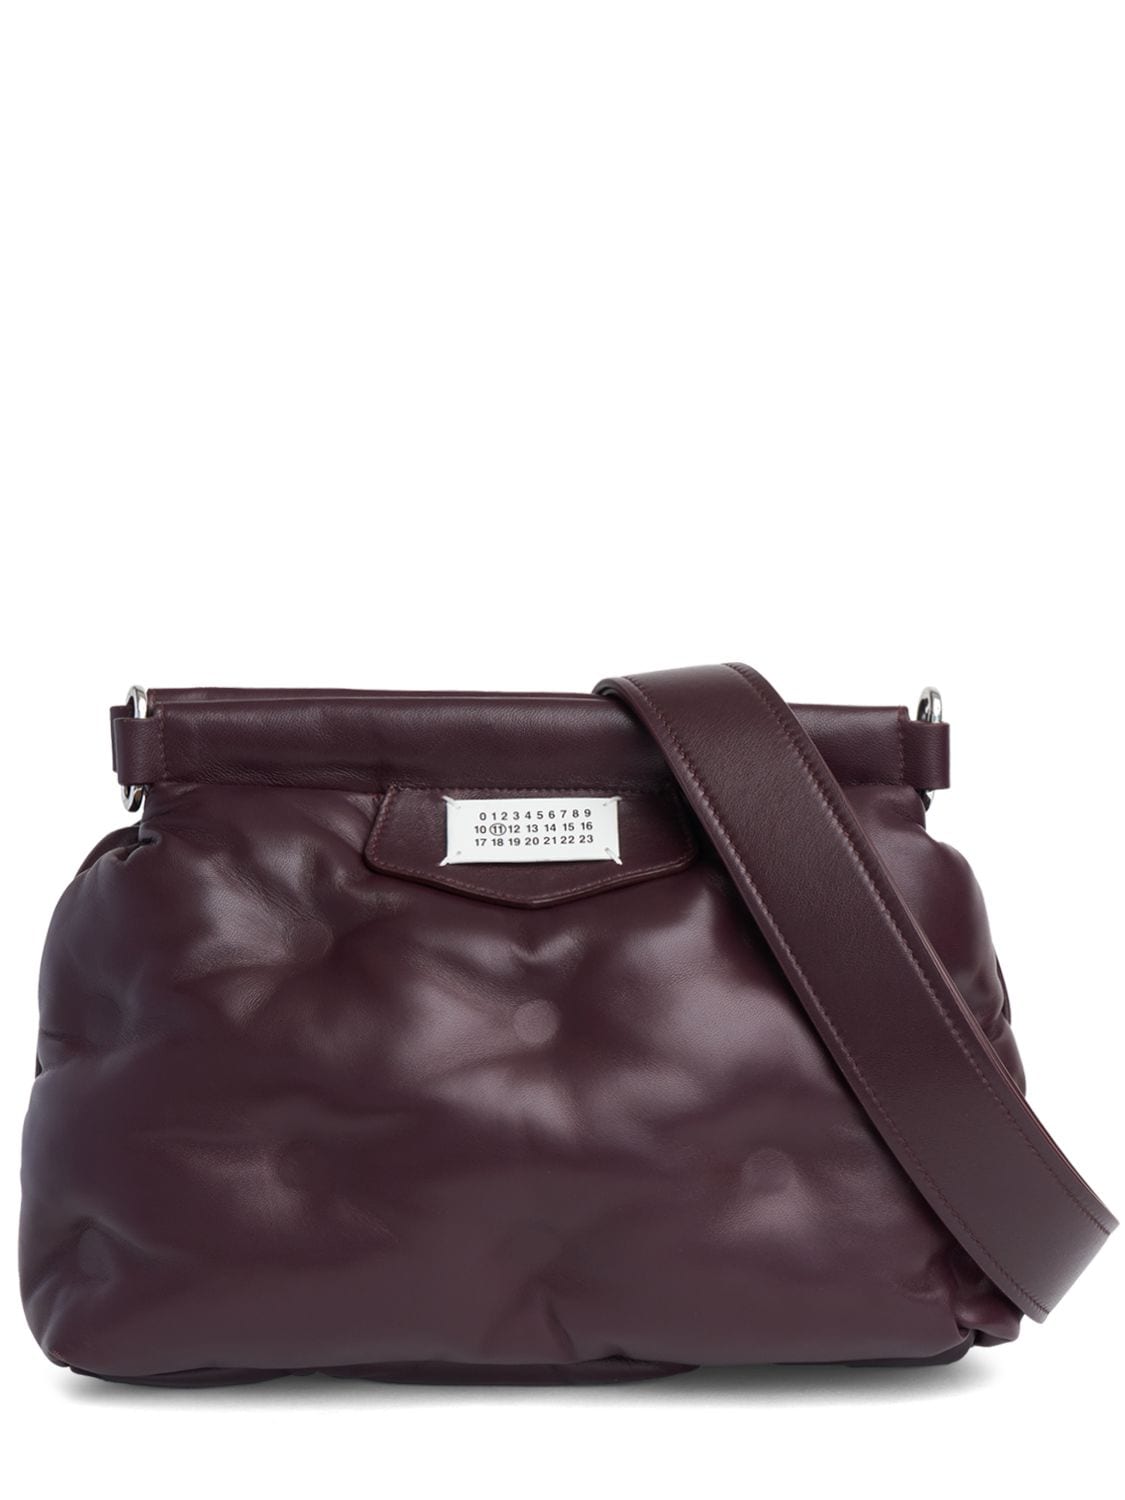 Maison Margiela Small Glam Slam Classique Shoulder Bag In Merlot